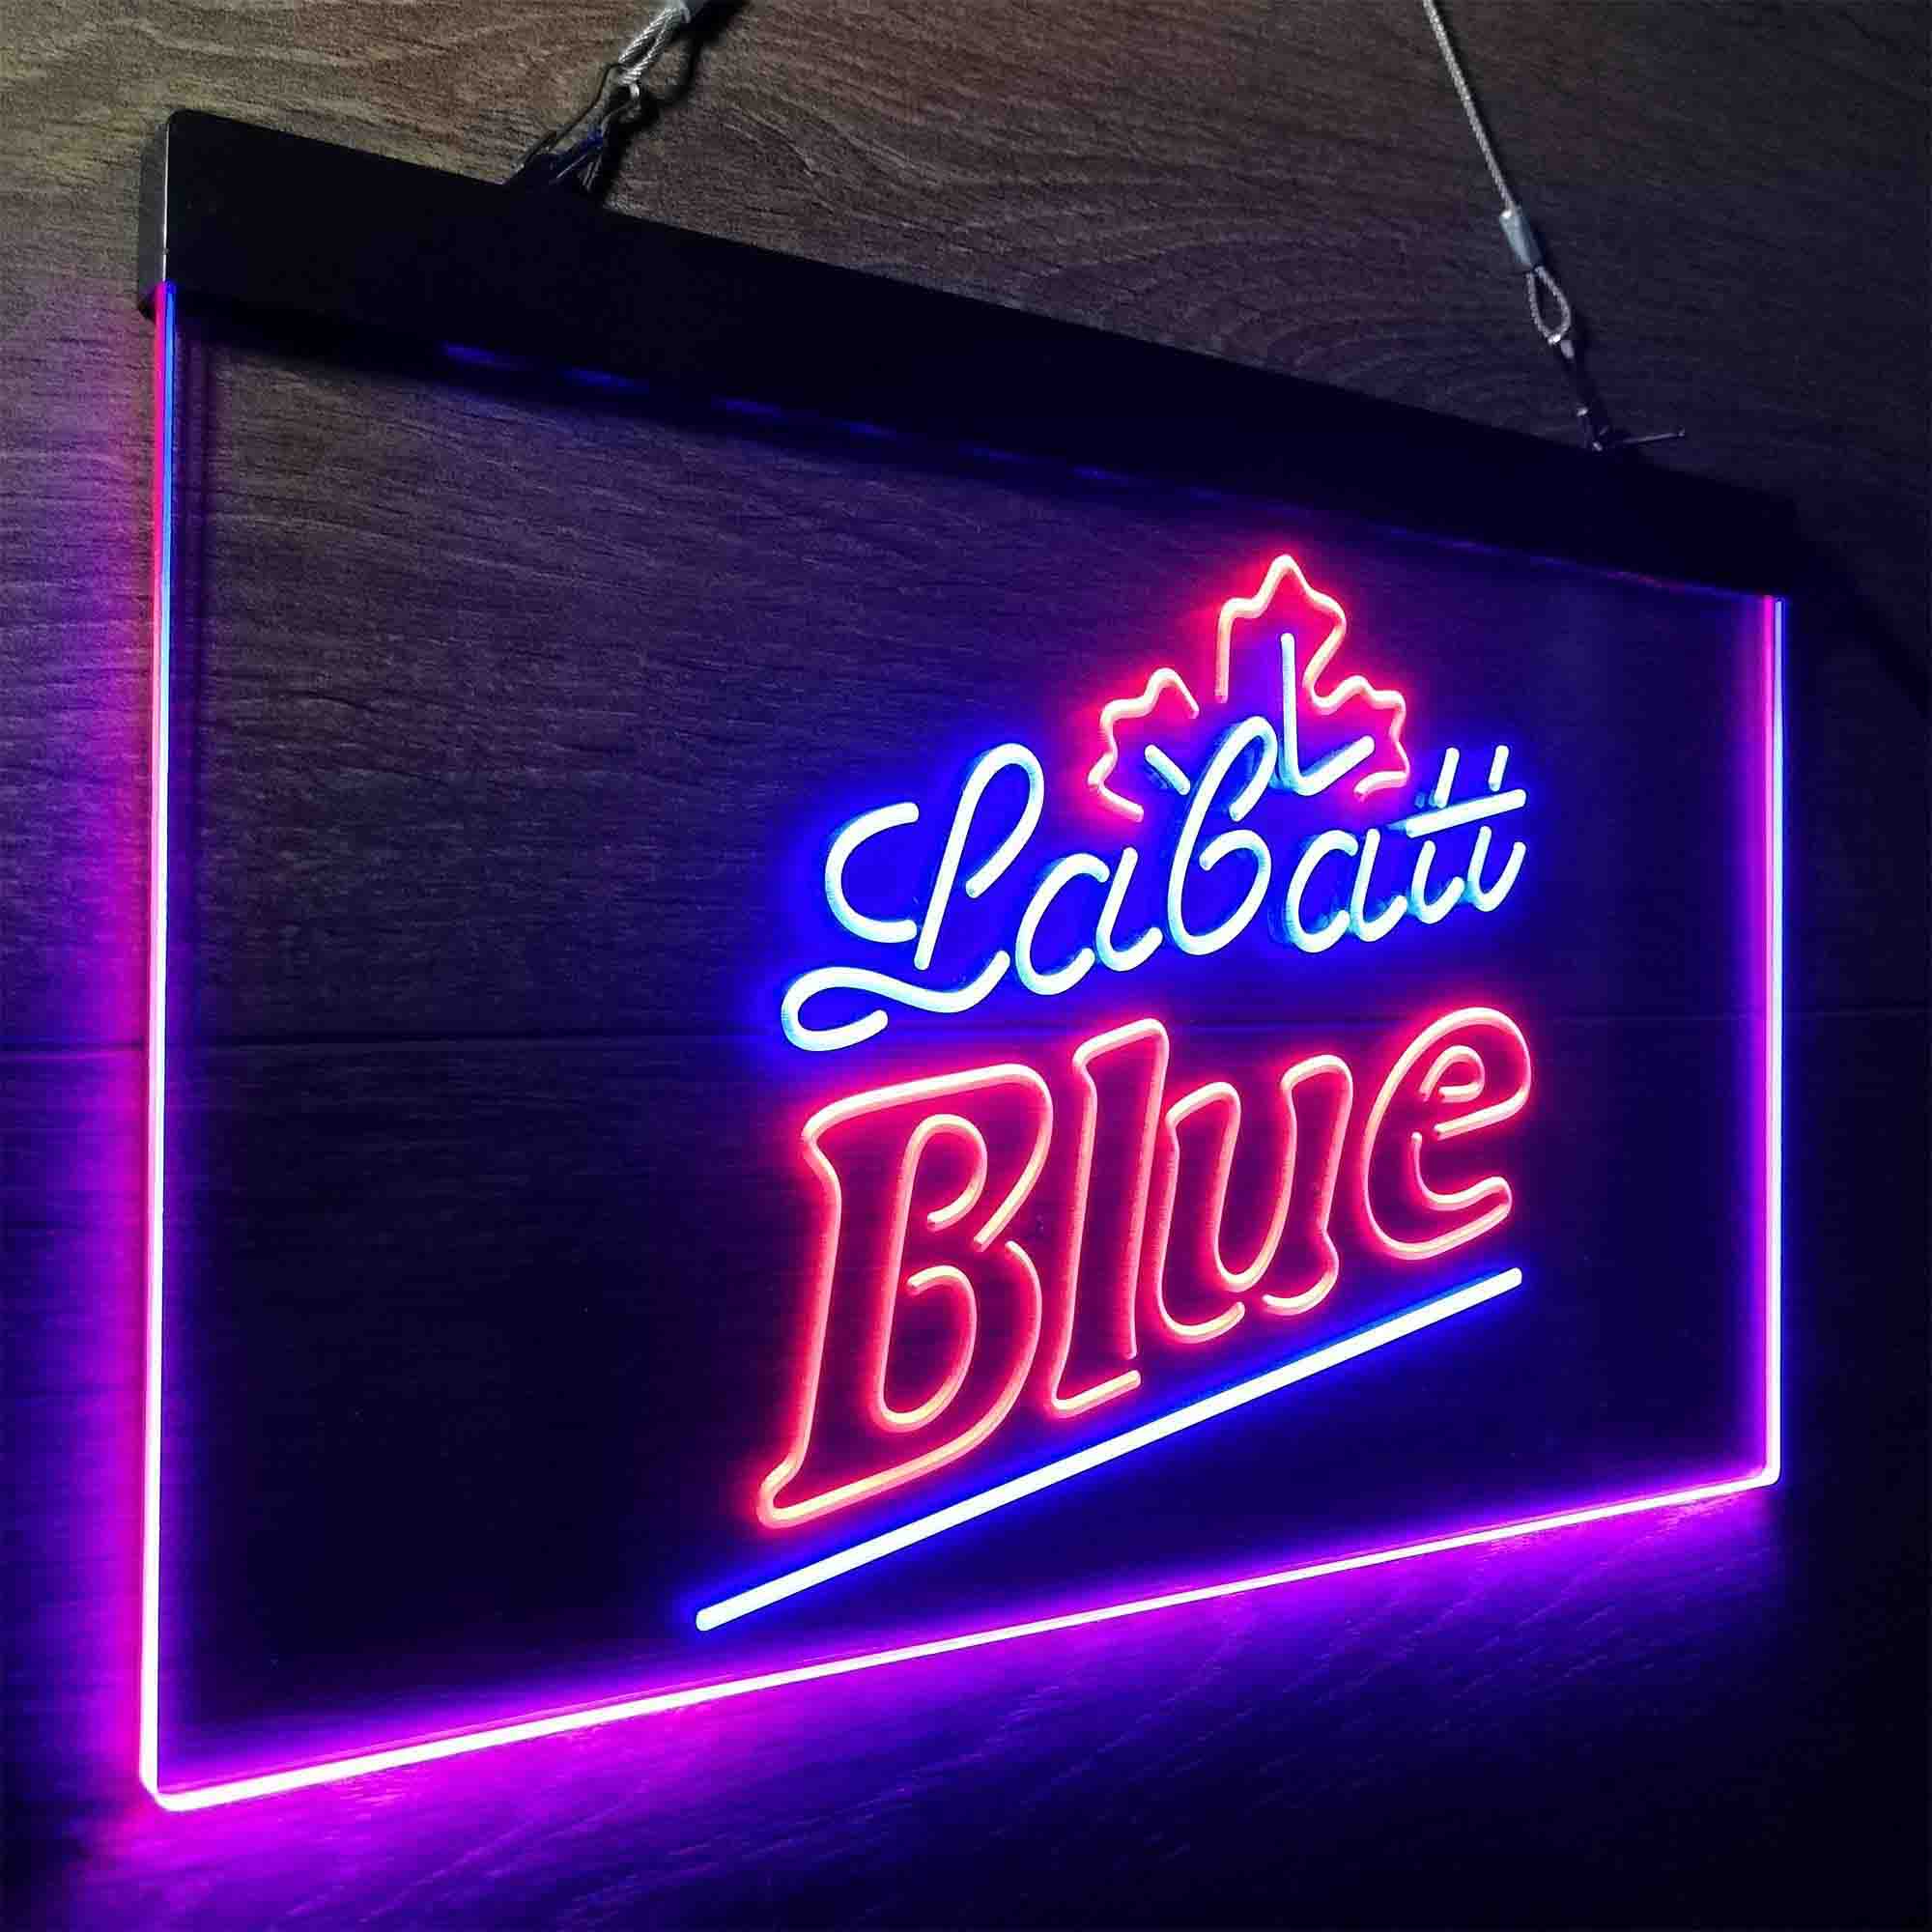 Labatt Blue Beer LED Neon Sign